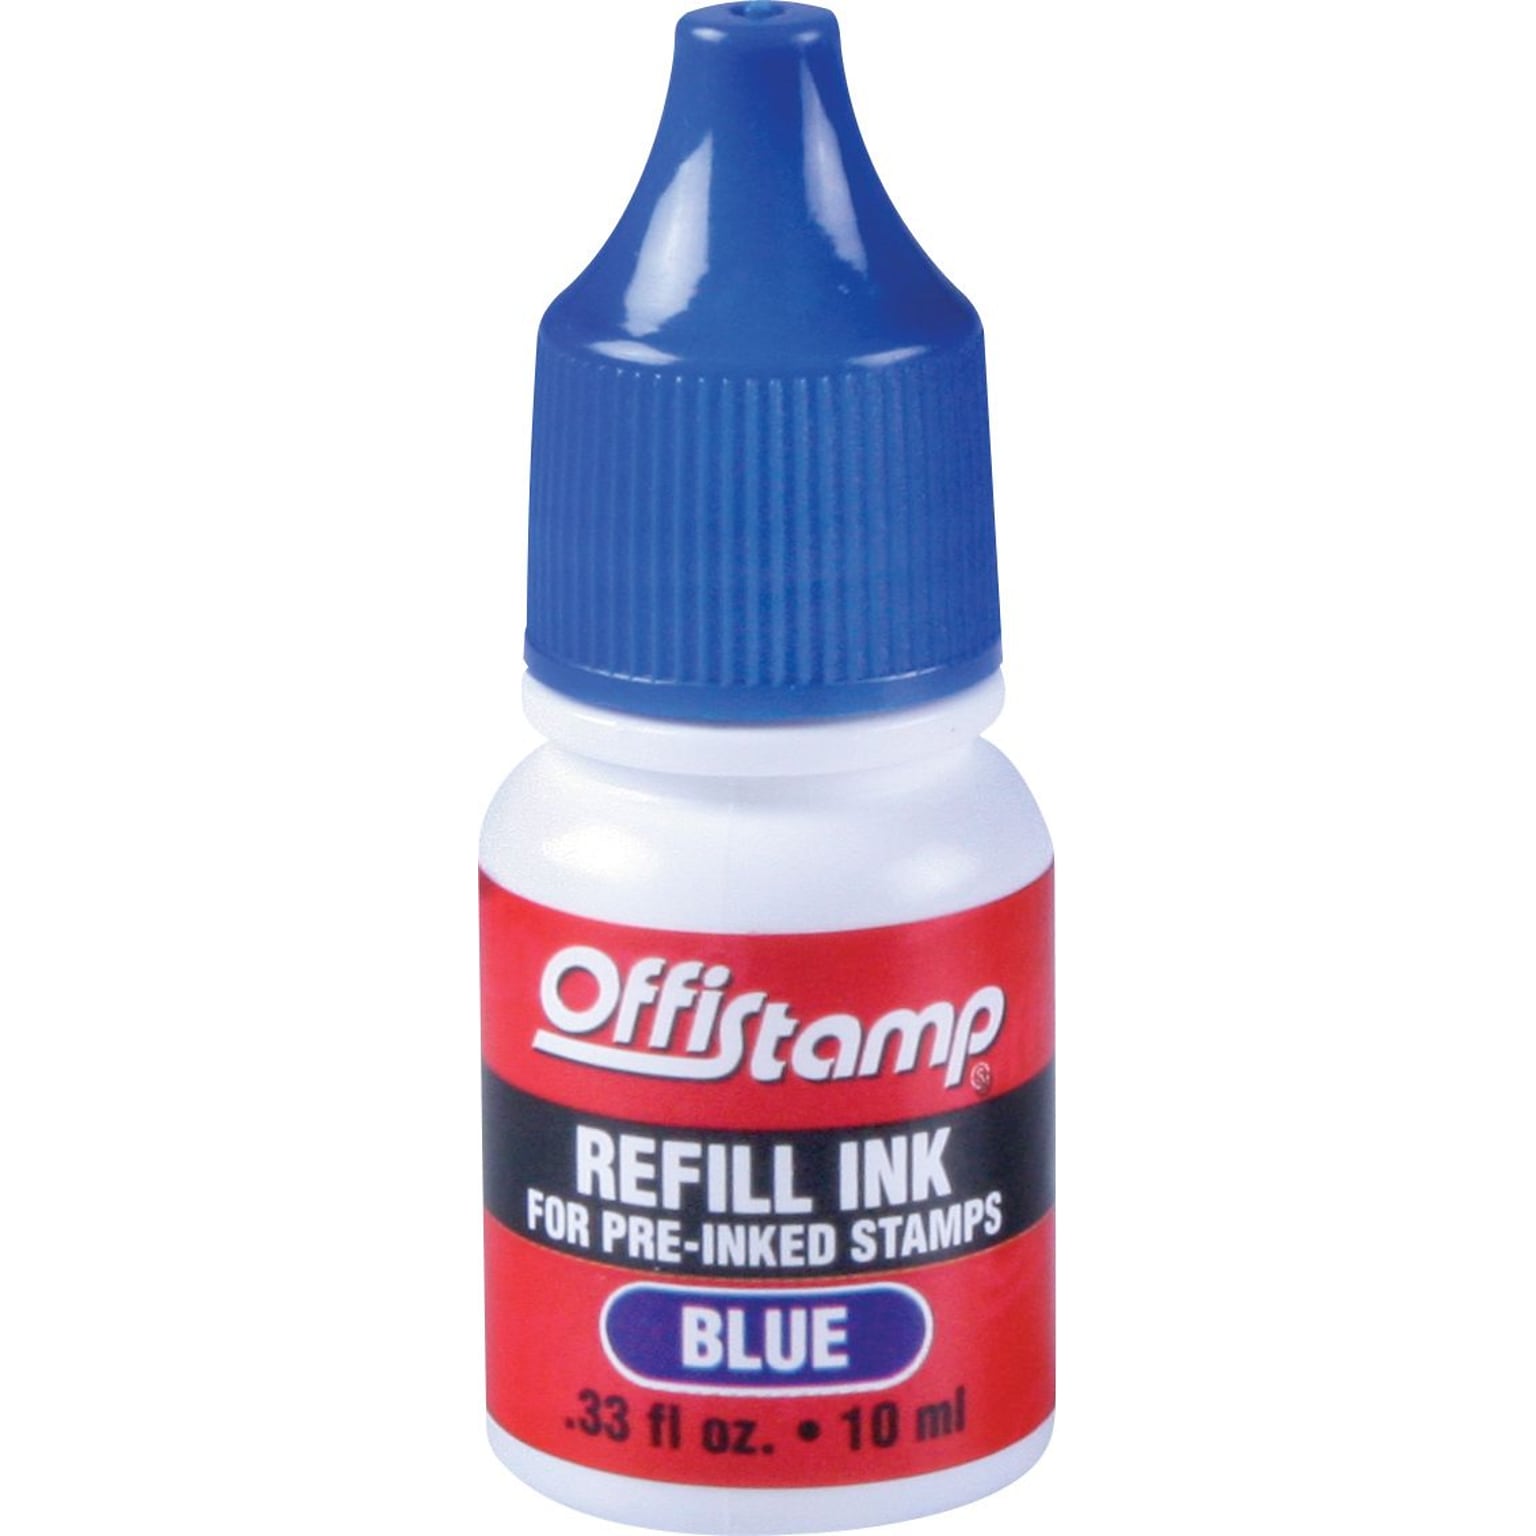 Offistamp® Pre-Inked Stamps Refill Ink, Blue